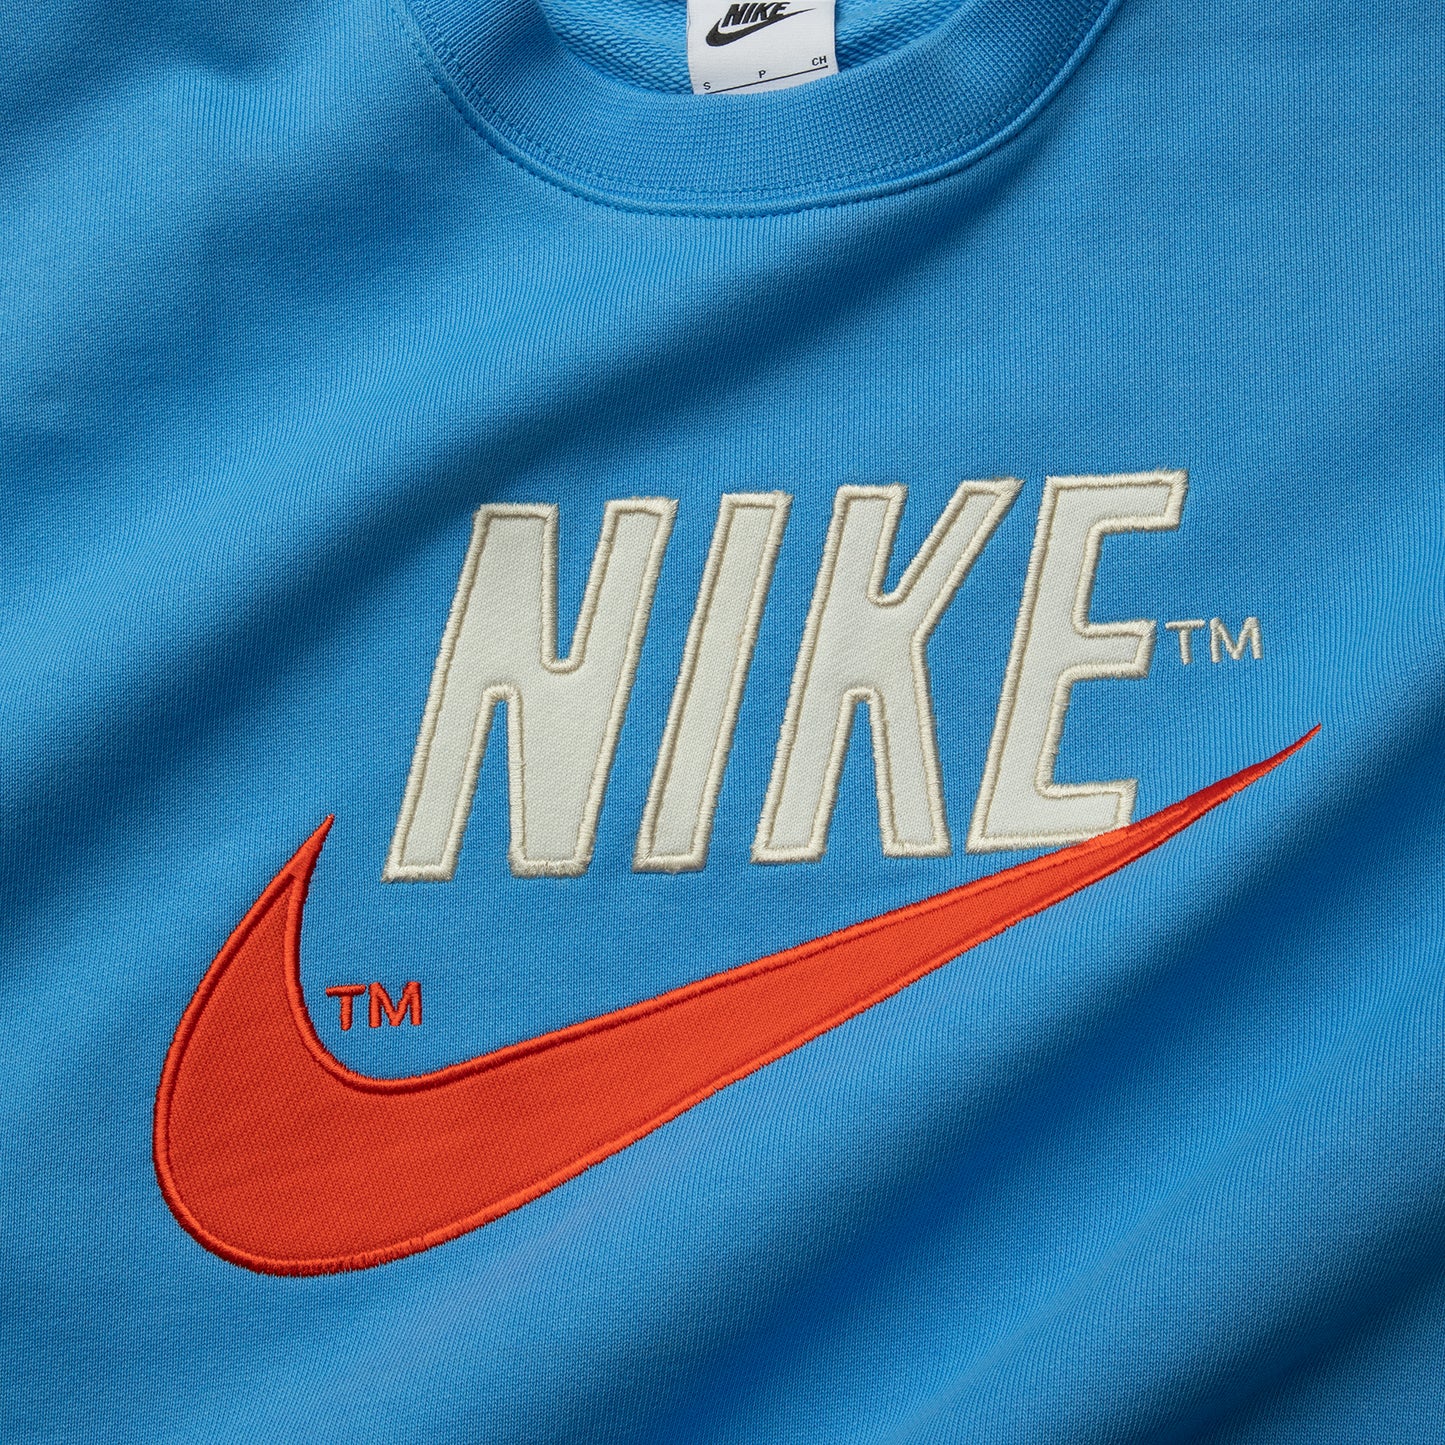 Nike Sportswear French Terry Crew (University Blue)